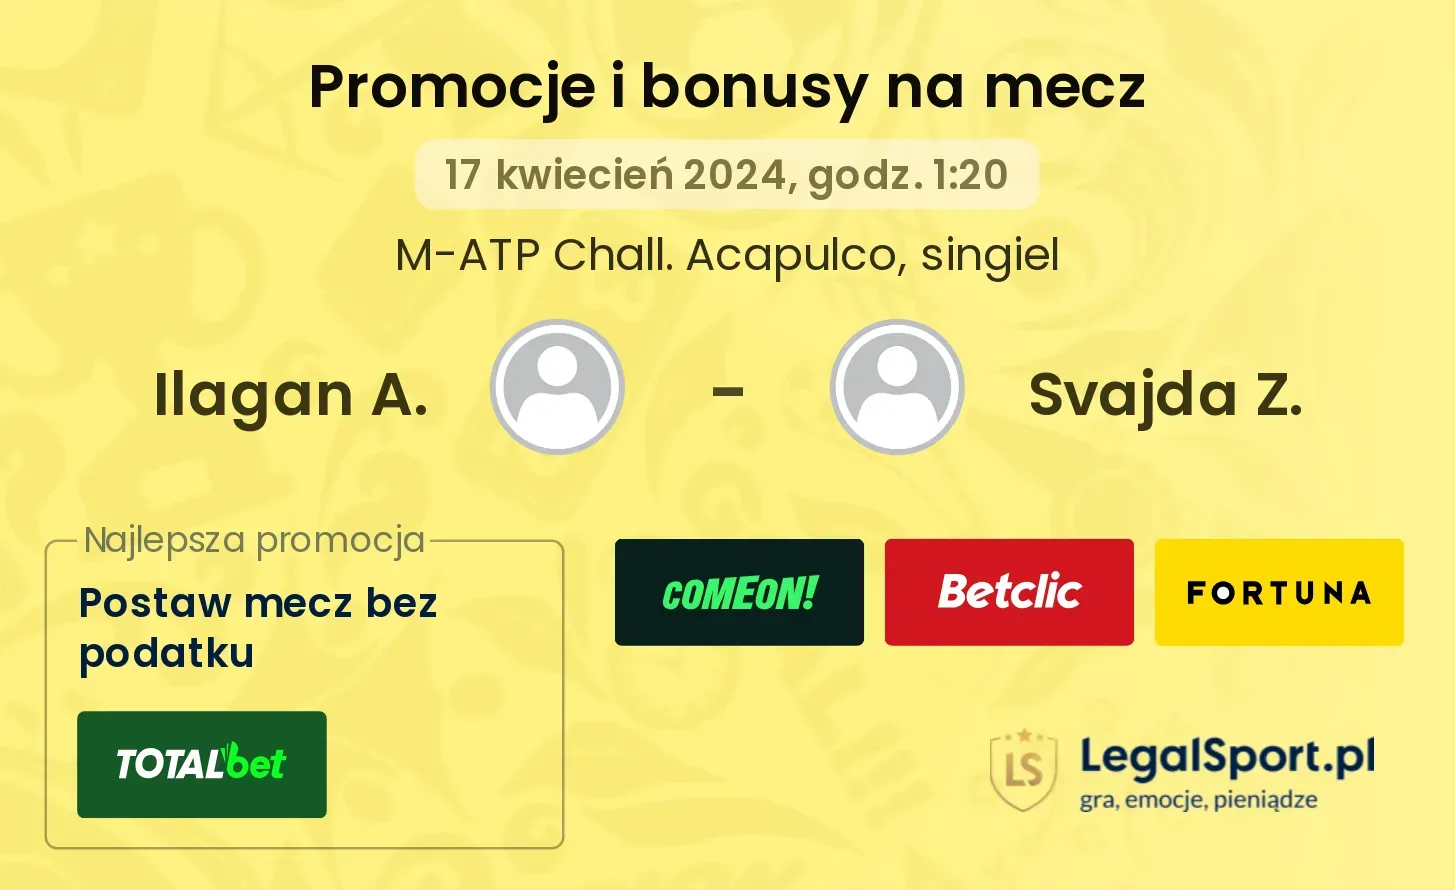 Ilagan A. - Svajda Z. promocje bonusy na mecz